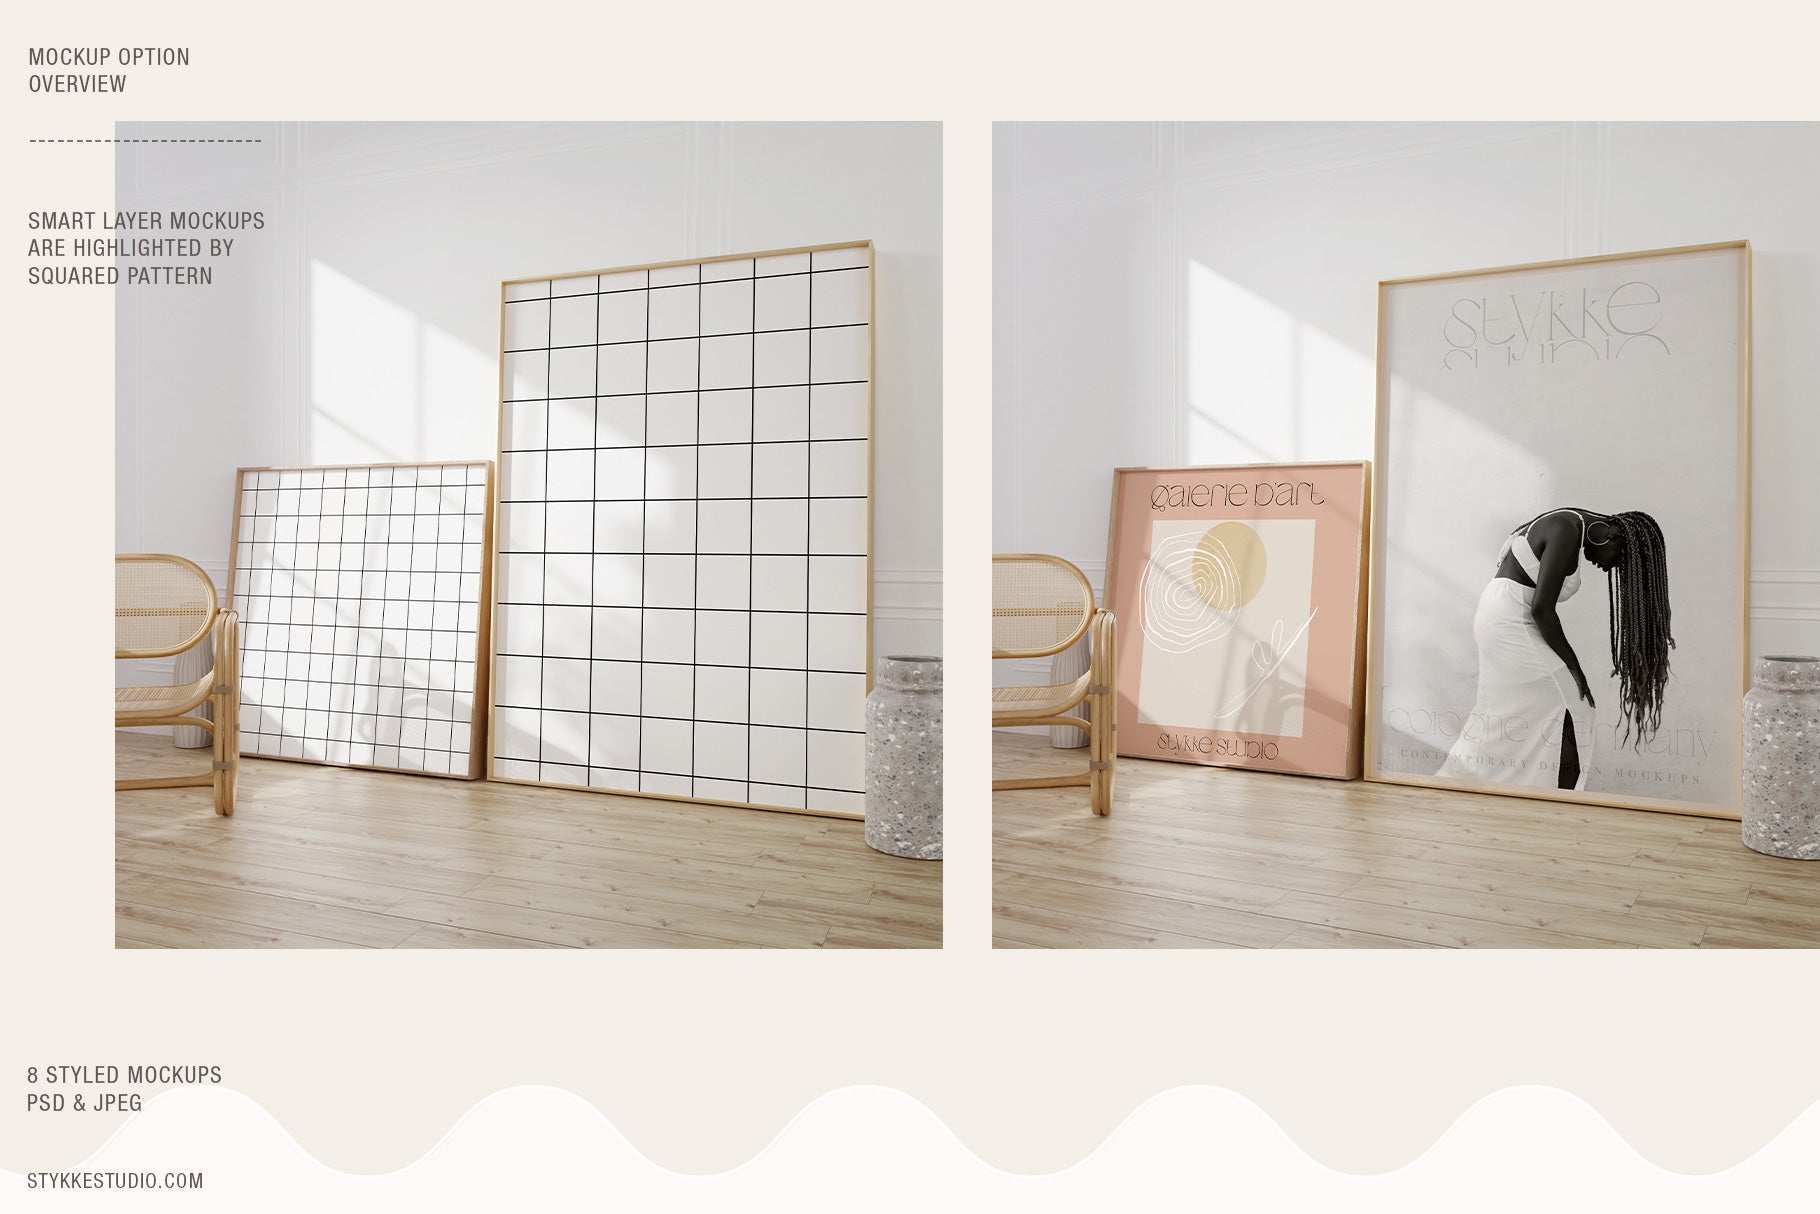 AIR & SUN | Frame Mockup Mini Set - Stykke Studio